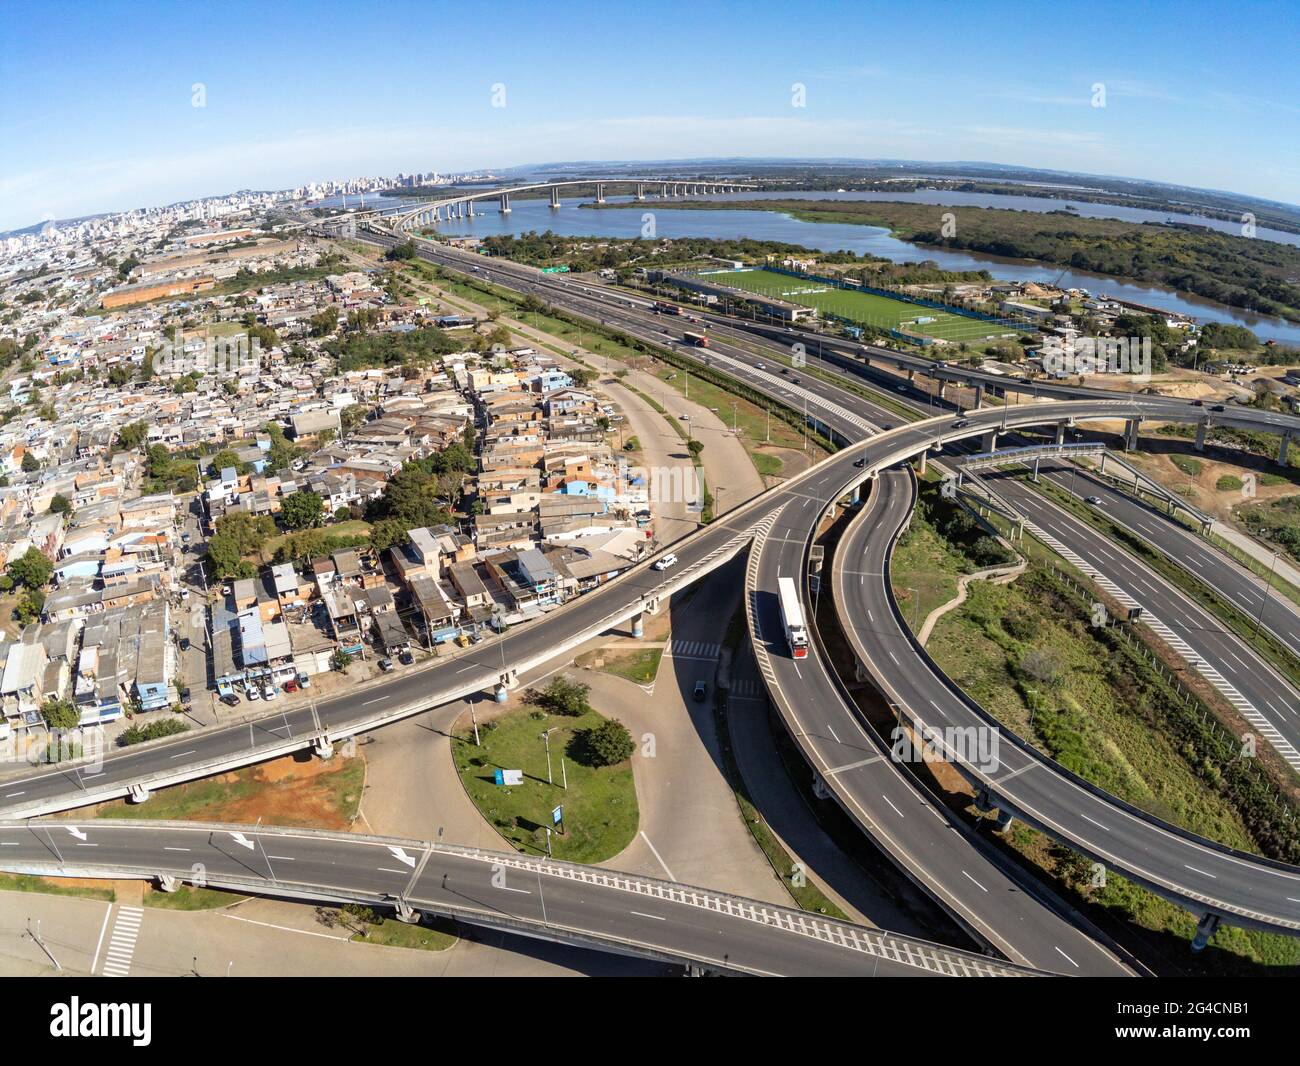 Aerial view of Humaita area with houses, Jacui river, highways and bridges, Porto Alegre, Rio Grande do Sul, Brazil Stock Photo